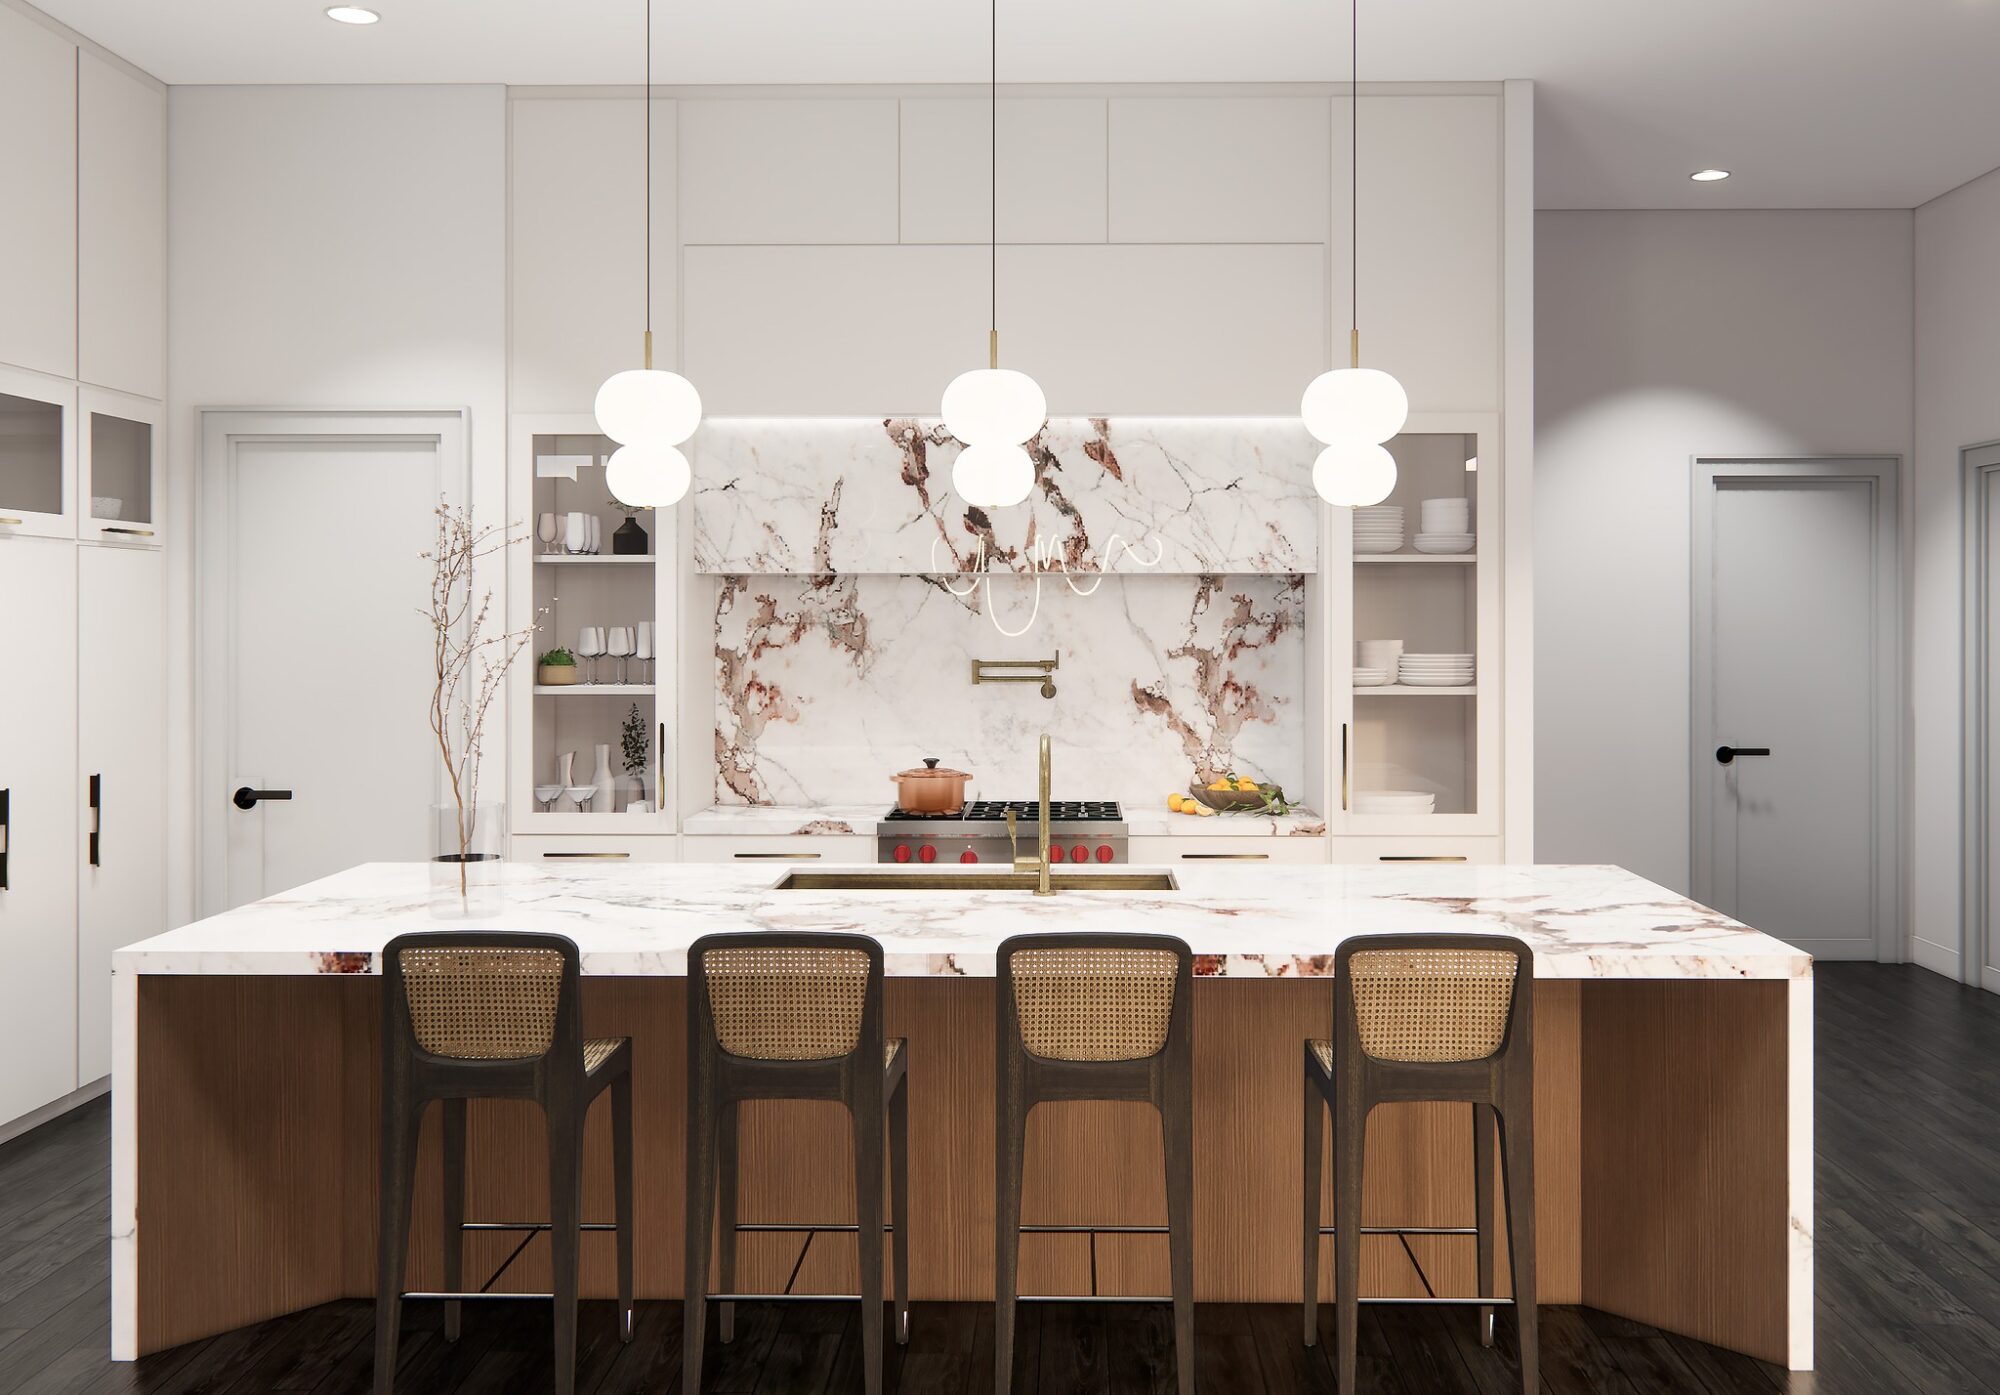 Home Interior Design, kitchen interior design, interior designer, neutral kitchen palate